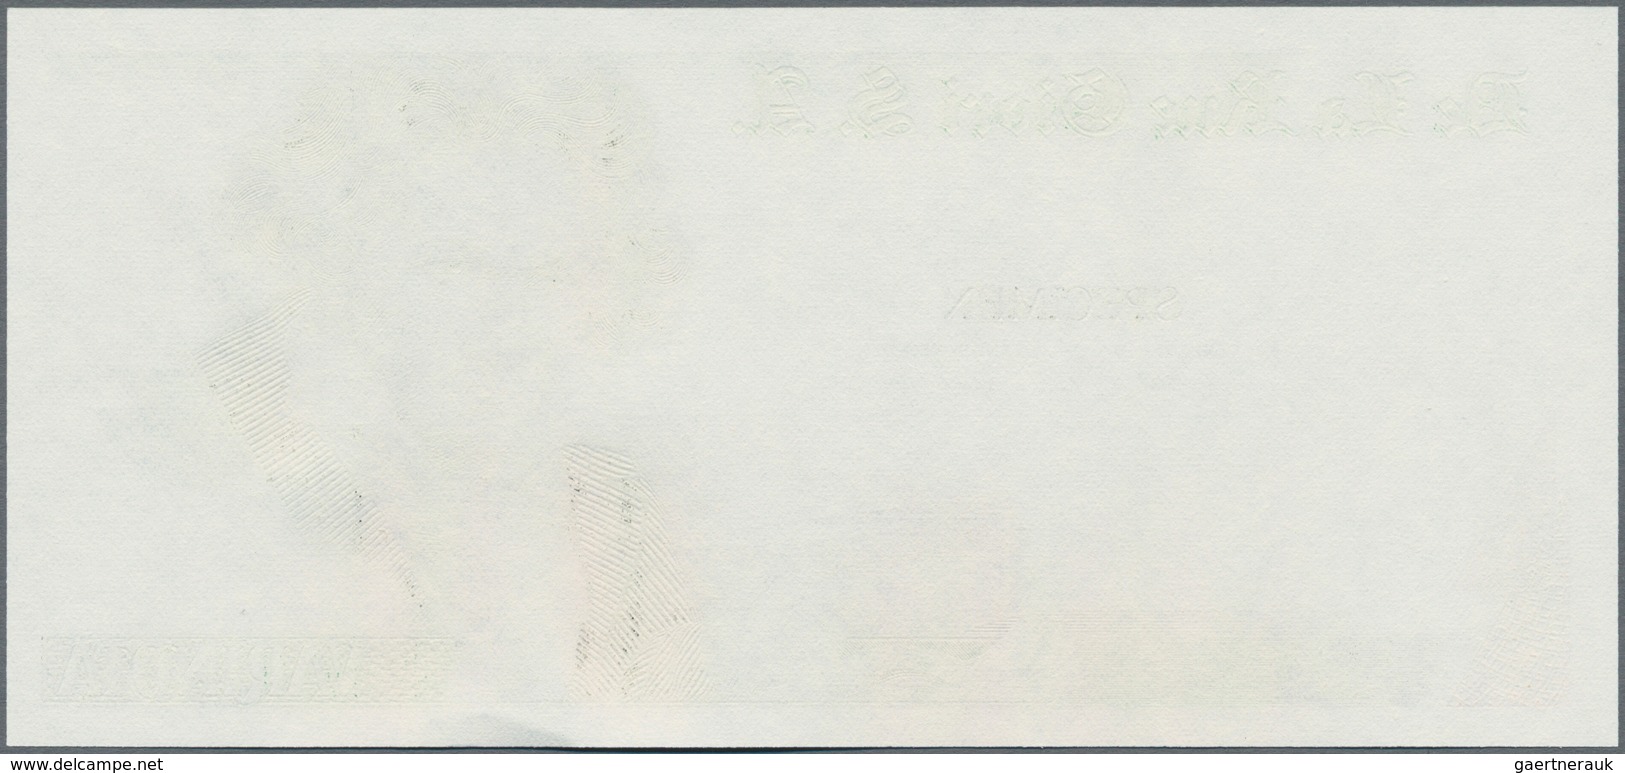 Testbanknoten: Bundle Of 100 Pcs. Test Notes By De La Rue Giori S.A. VARINOTA With Portrait Of Ludwi - Specimen